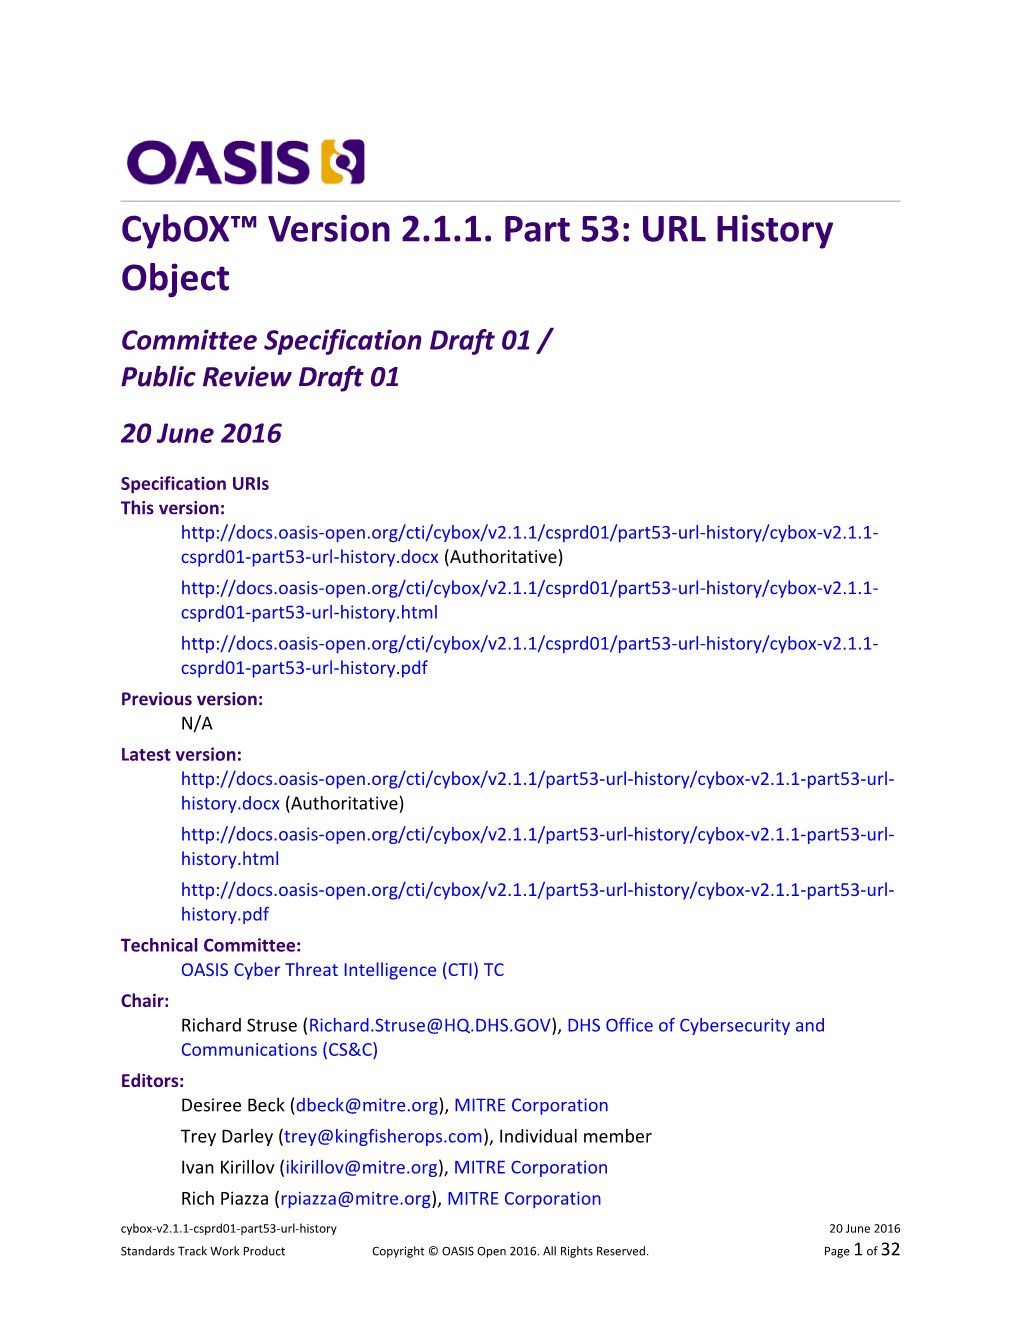 Cybox Version 2.1.1. Part 53: URL History Object